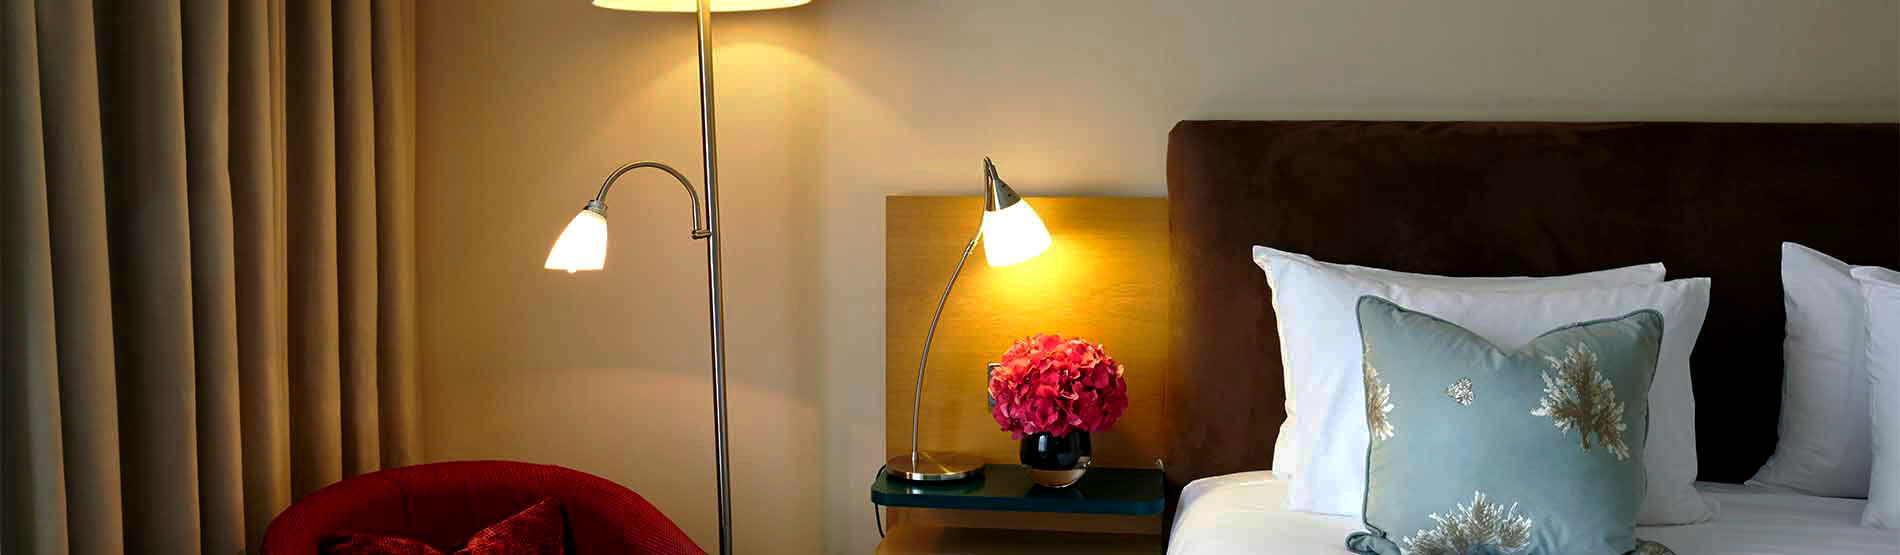 Bedroom detail with bedside lamp and pink floral arrangement